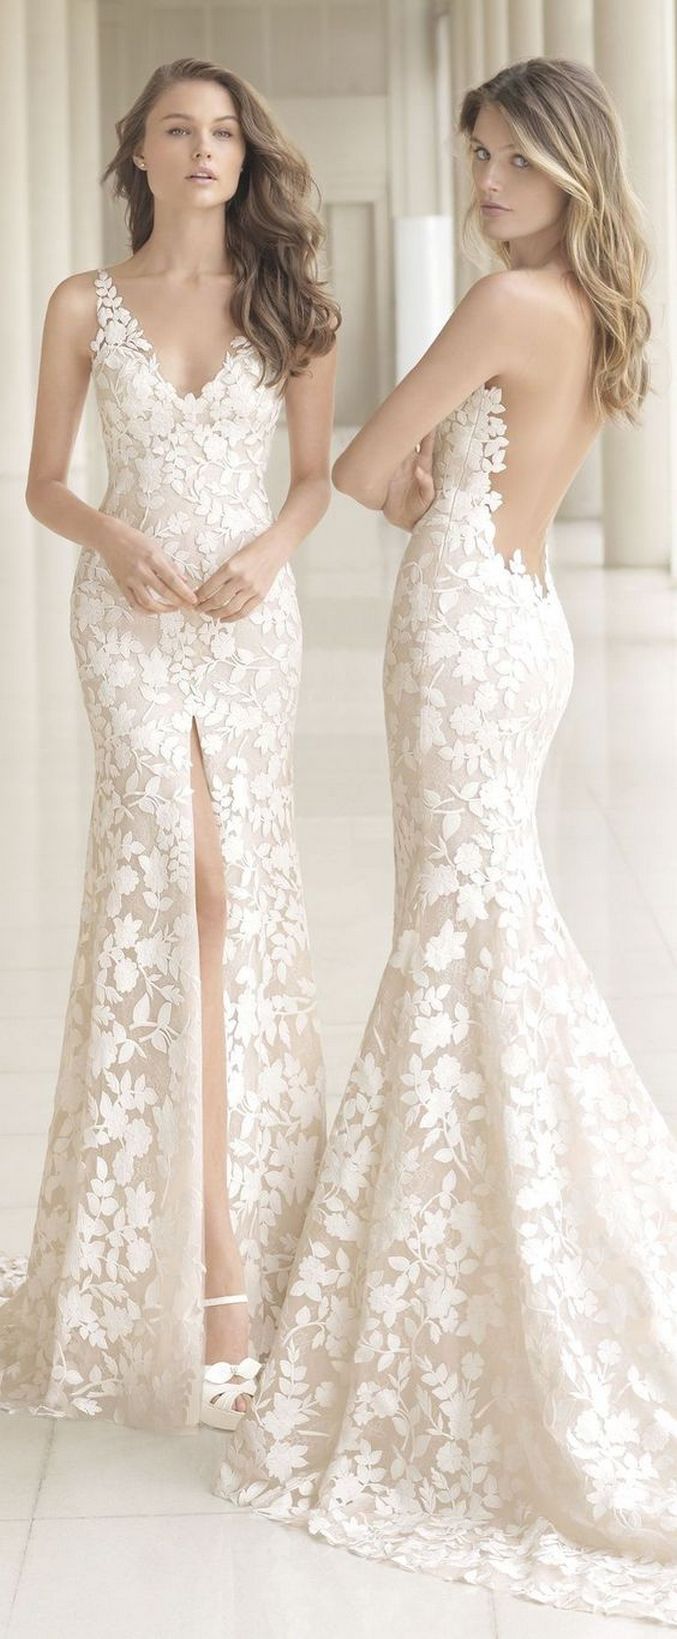 Embellished Wedding Gowns Ideas 33 Style Female 1421